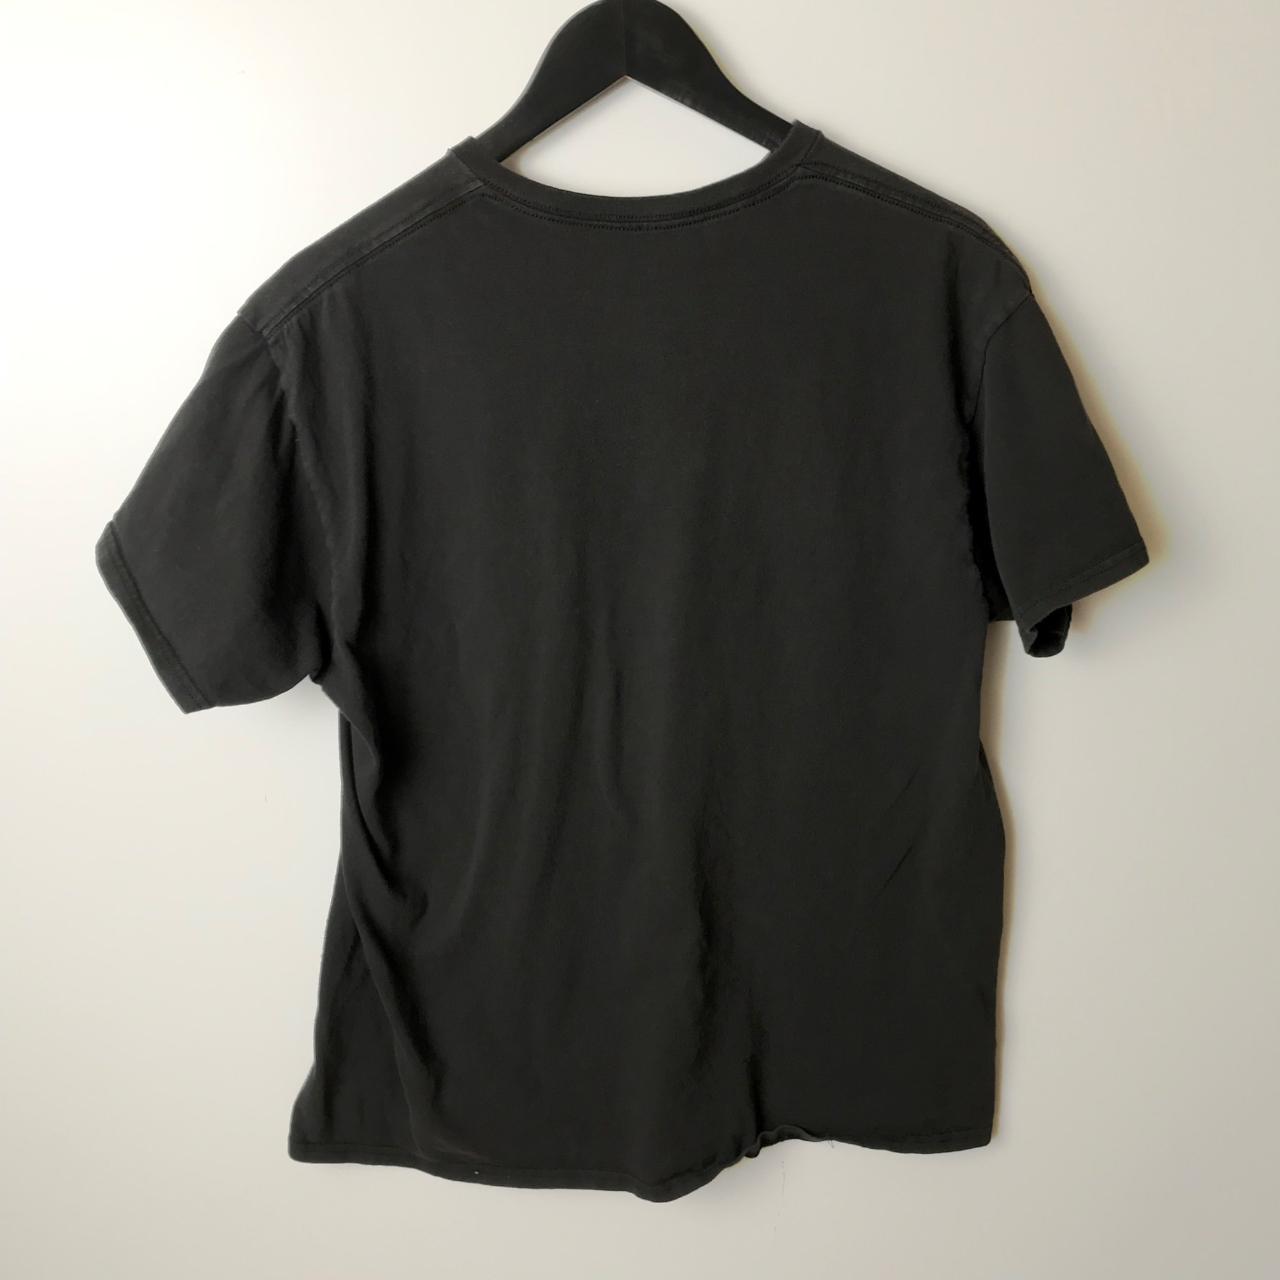 Fifth Sun Women's Black T-shirt (4)